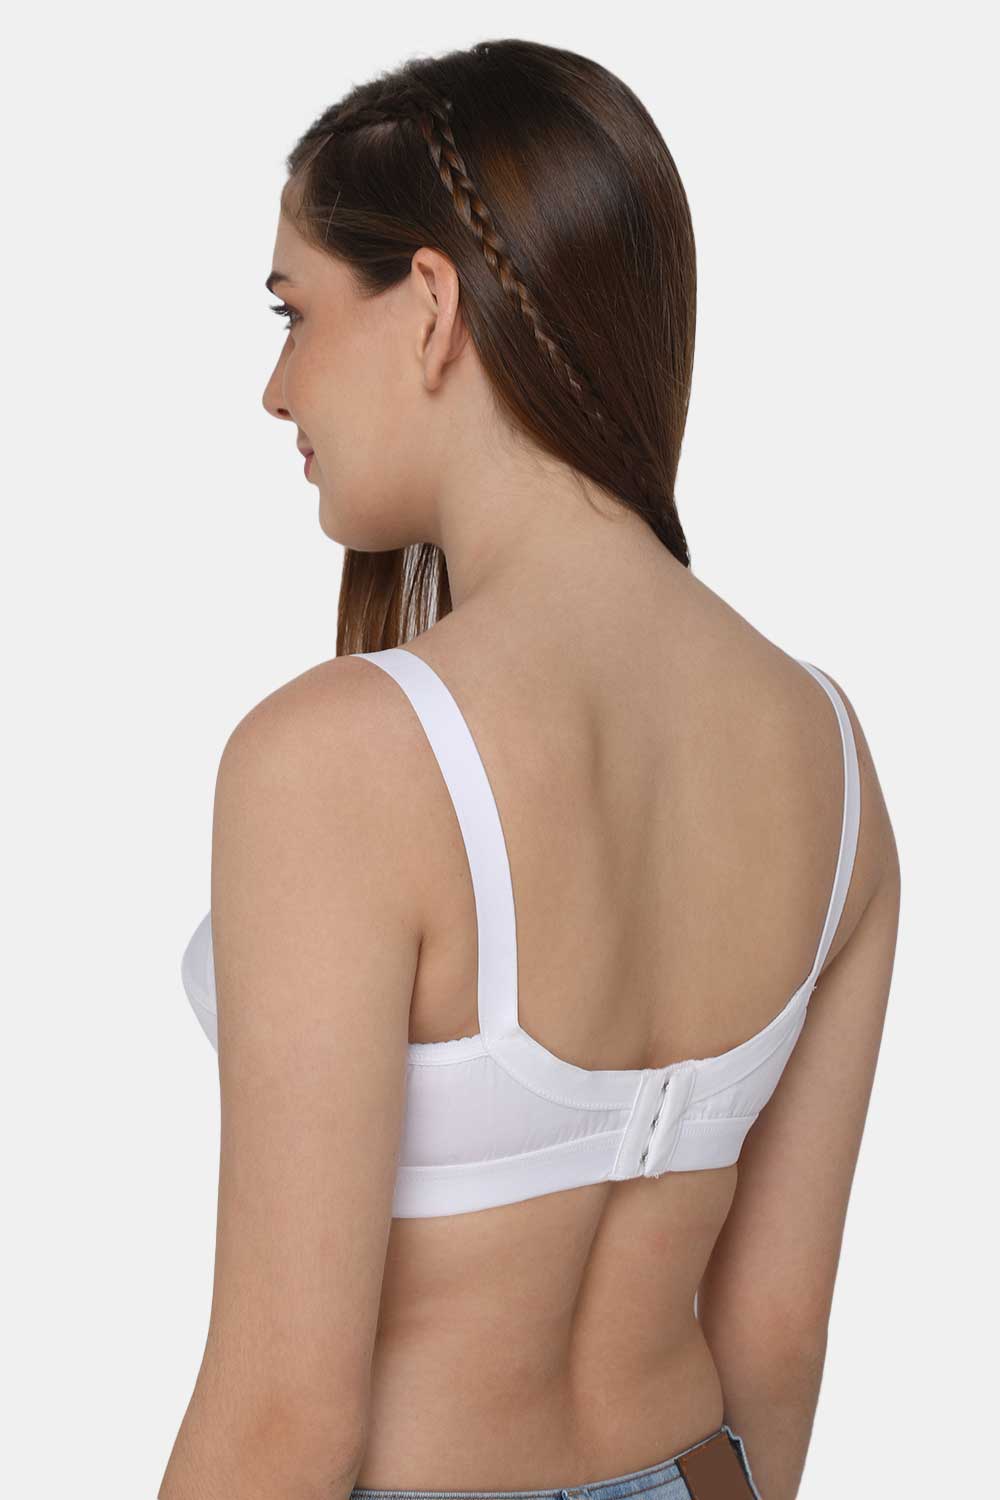 Intimacy Bra - Full Figure Moisture Absorbent Bra - Color White